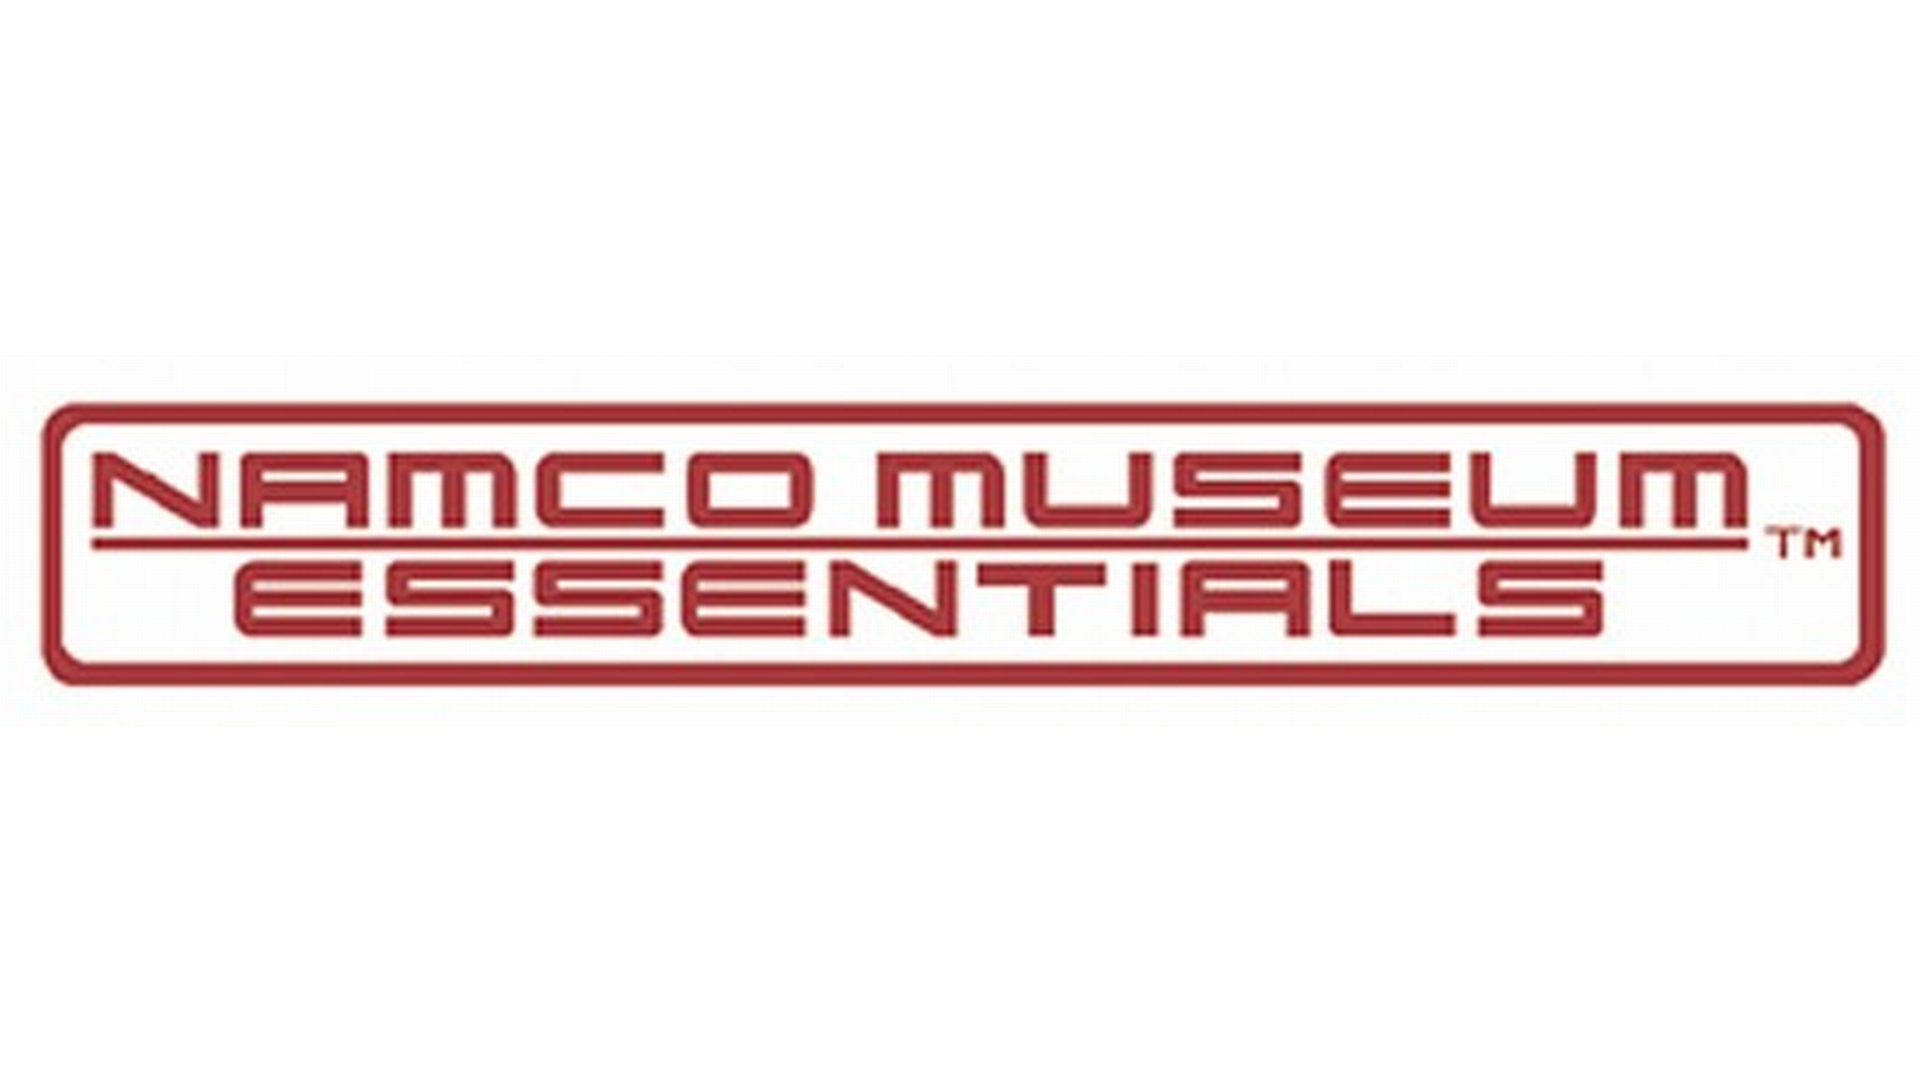 Namco Museum Essentials Logo